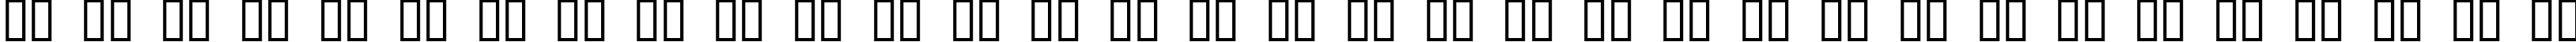 Пример написания русского алфавита шрифтом StyleBats CleanCut